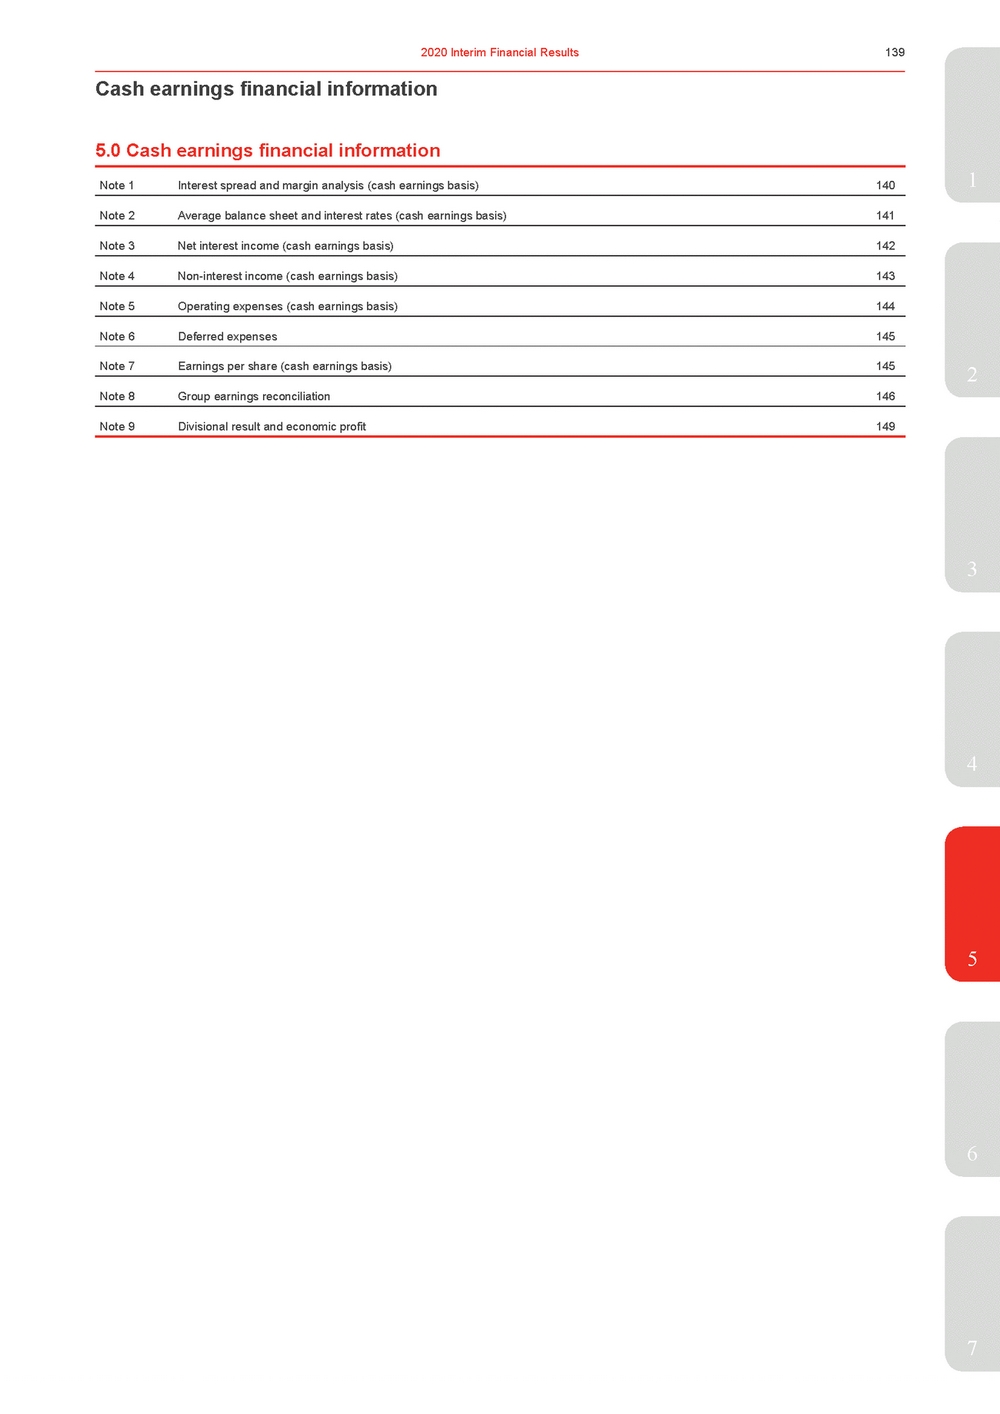 11676-3-ex1_westpac 2020 interim financial results announcement_page_144.jpg